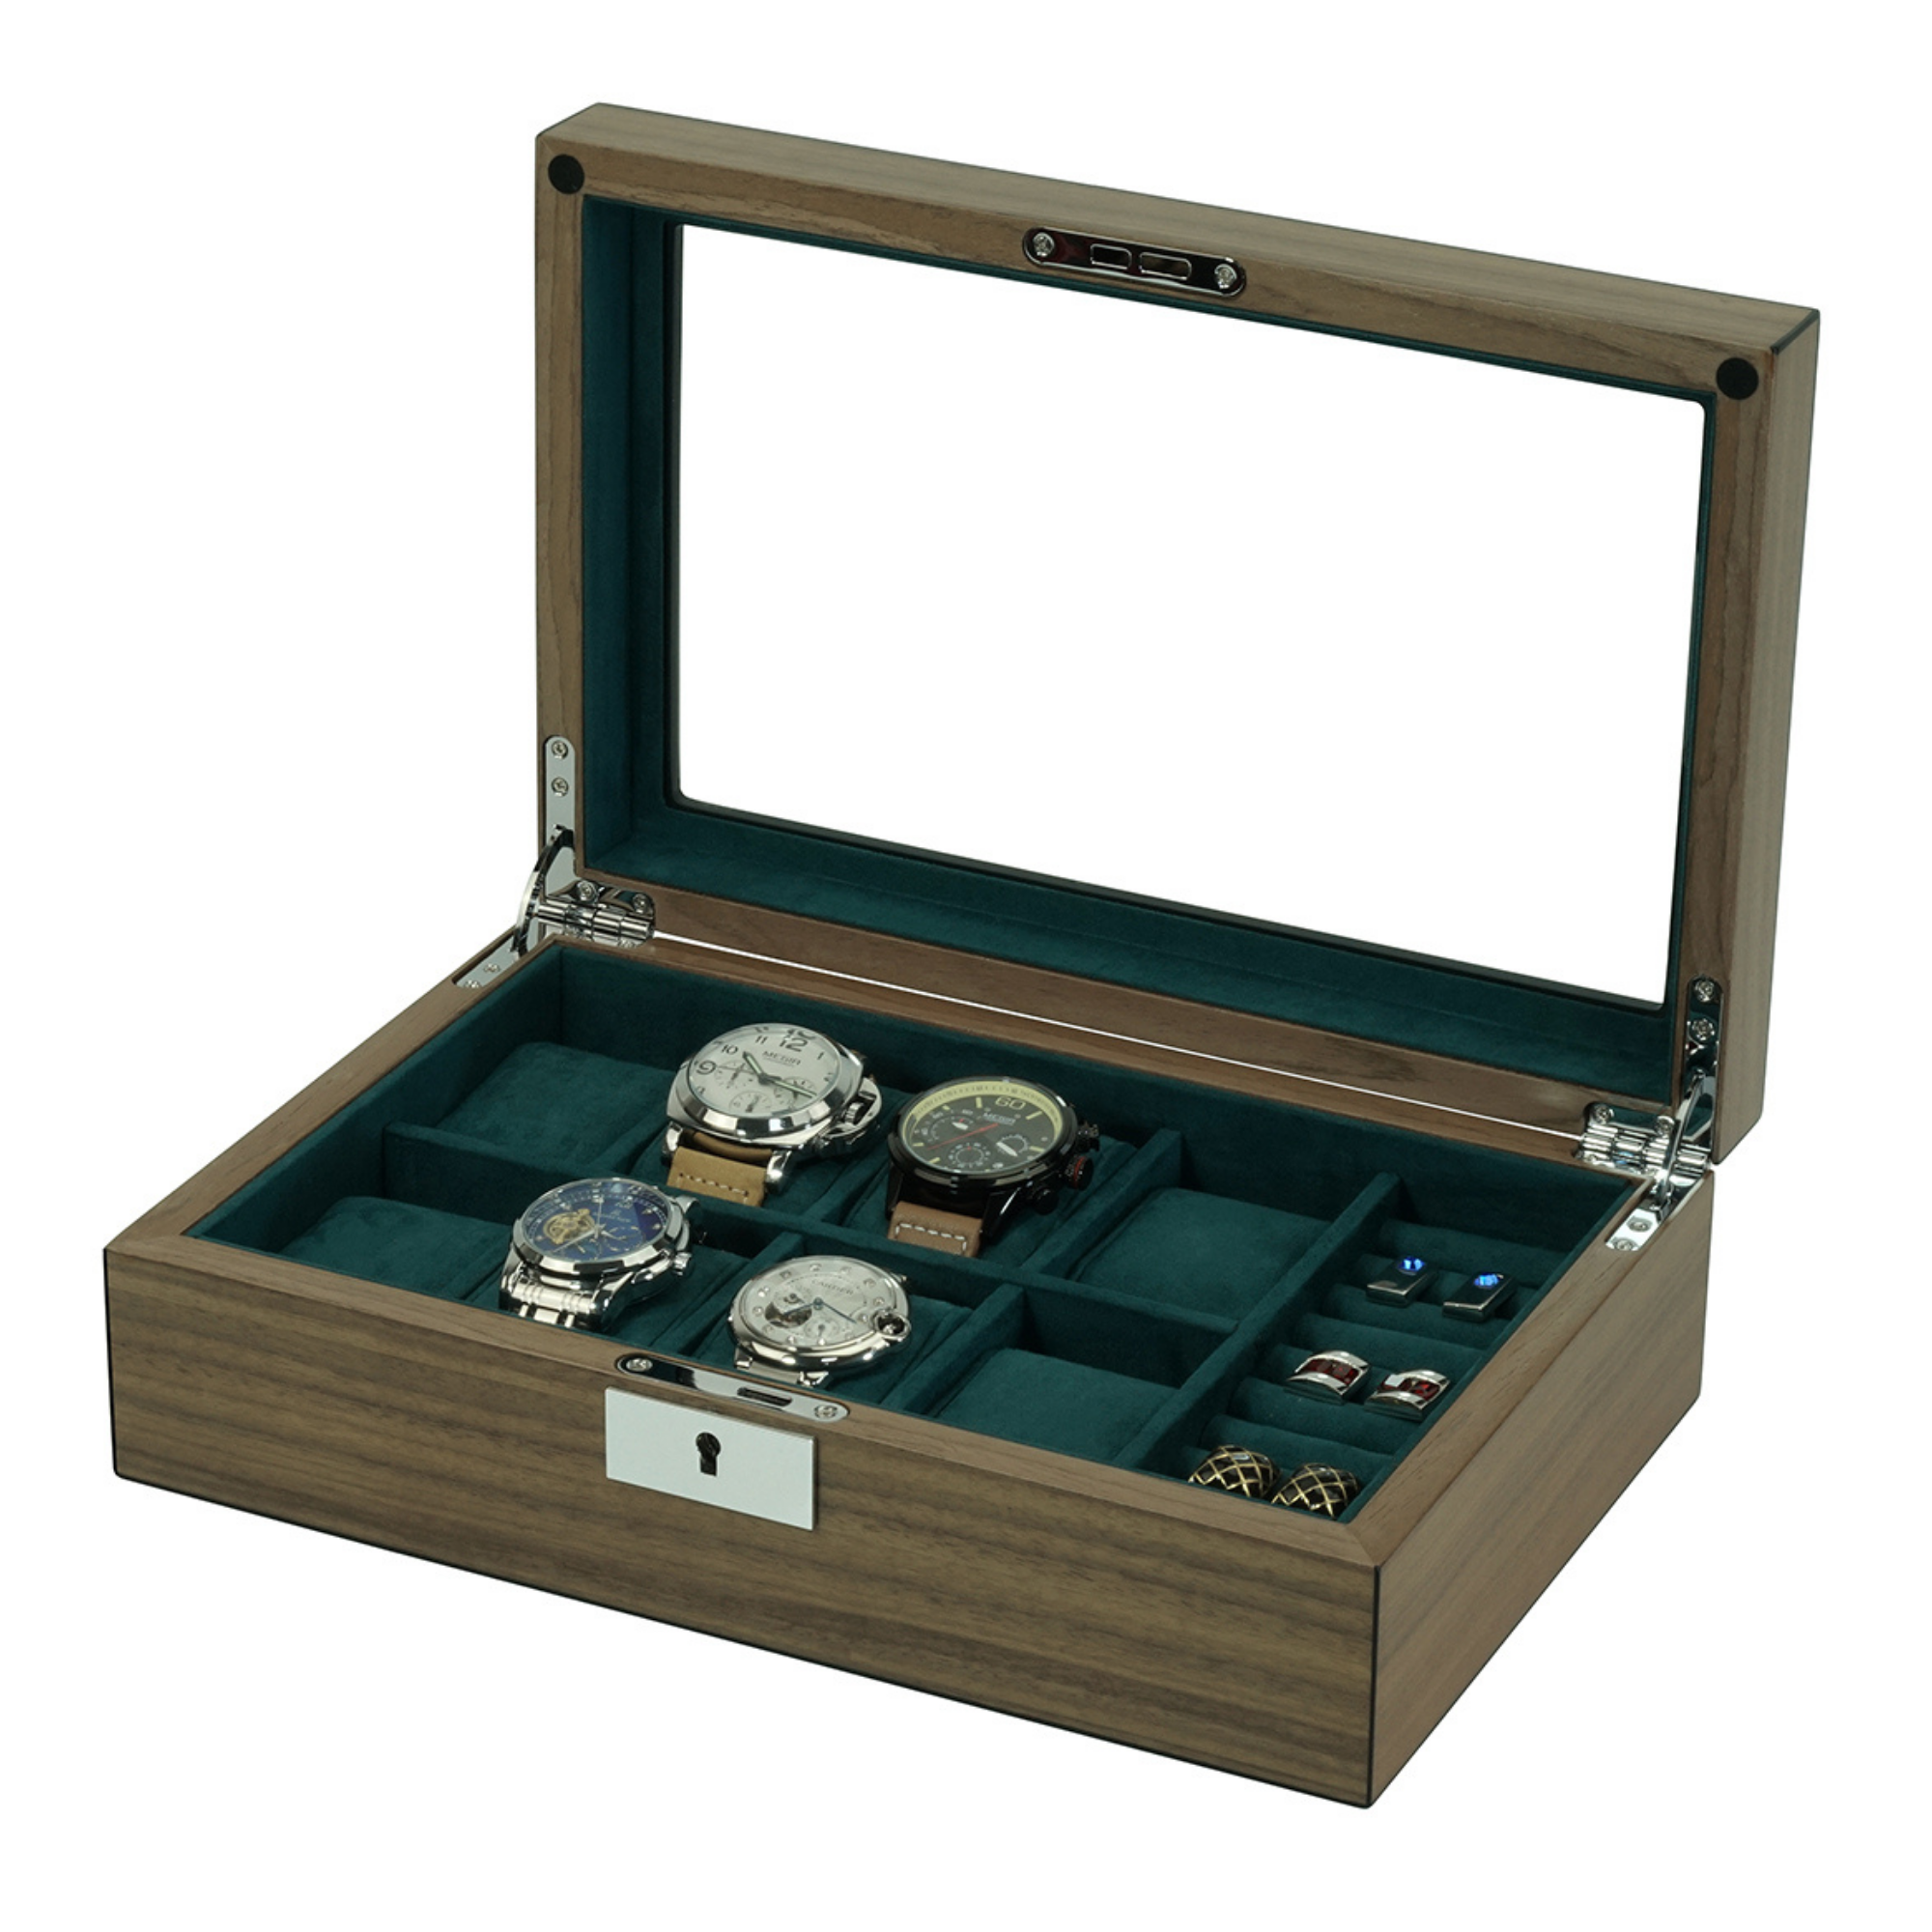 8 Slots Walnut Wooden Watch Box with Cufflinks Storage